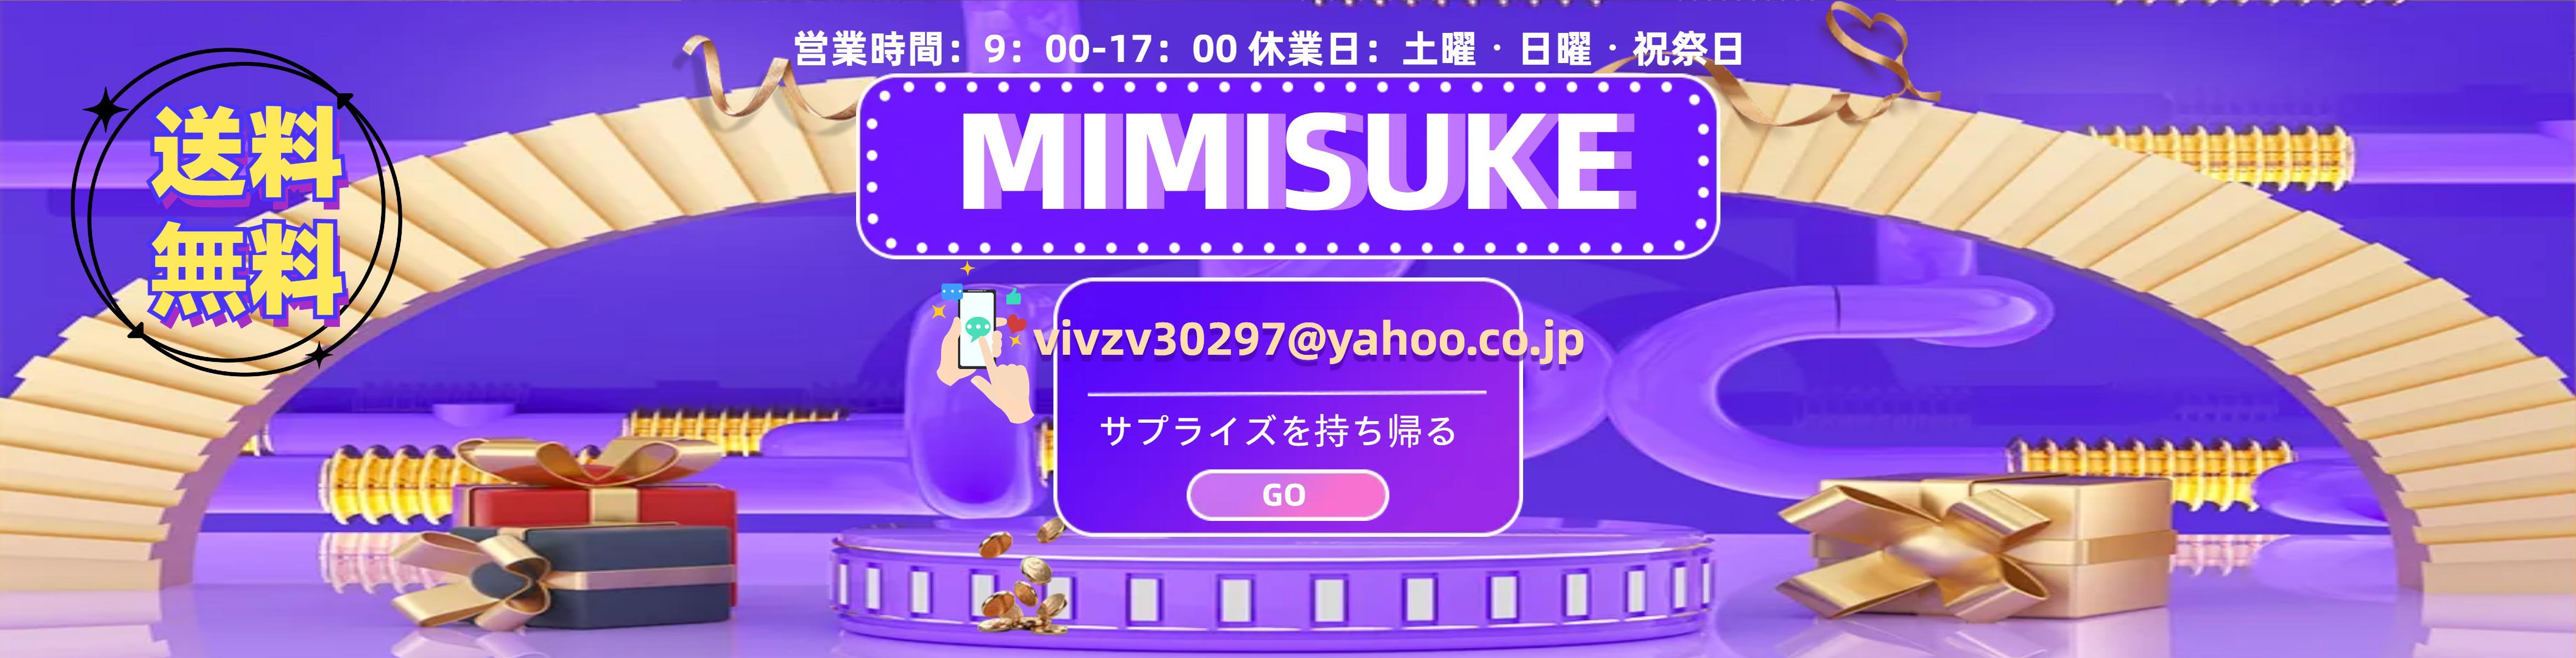 mimisukeSHOP ヘッダー画像